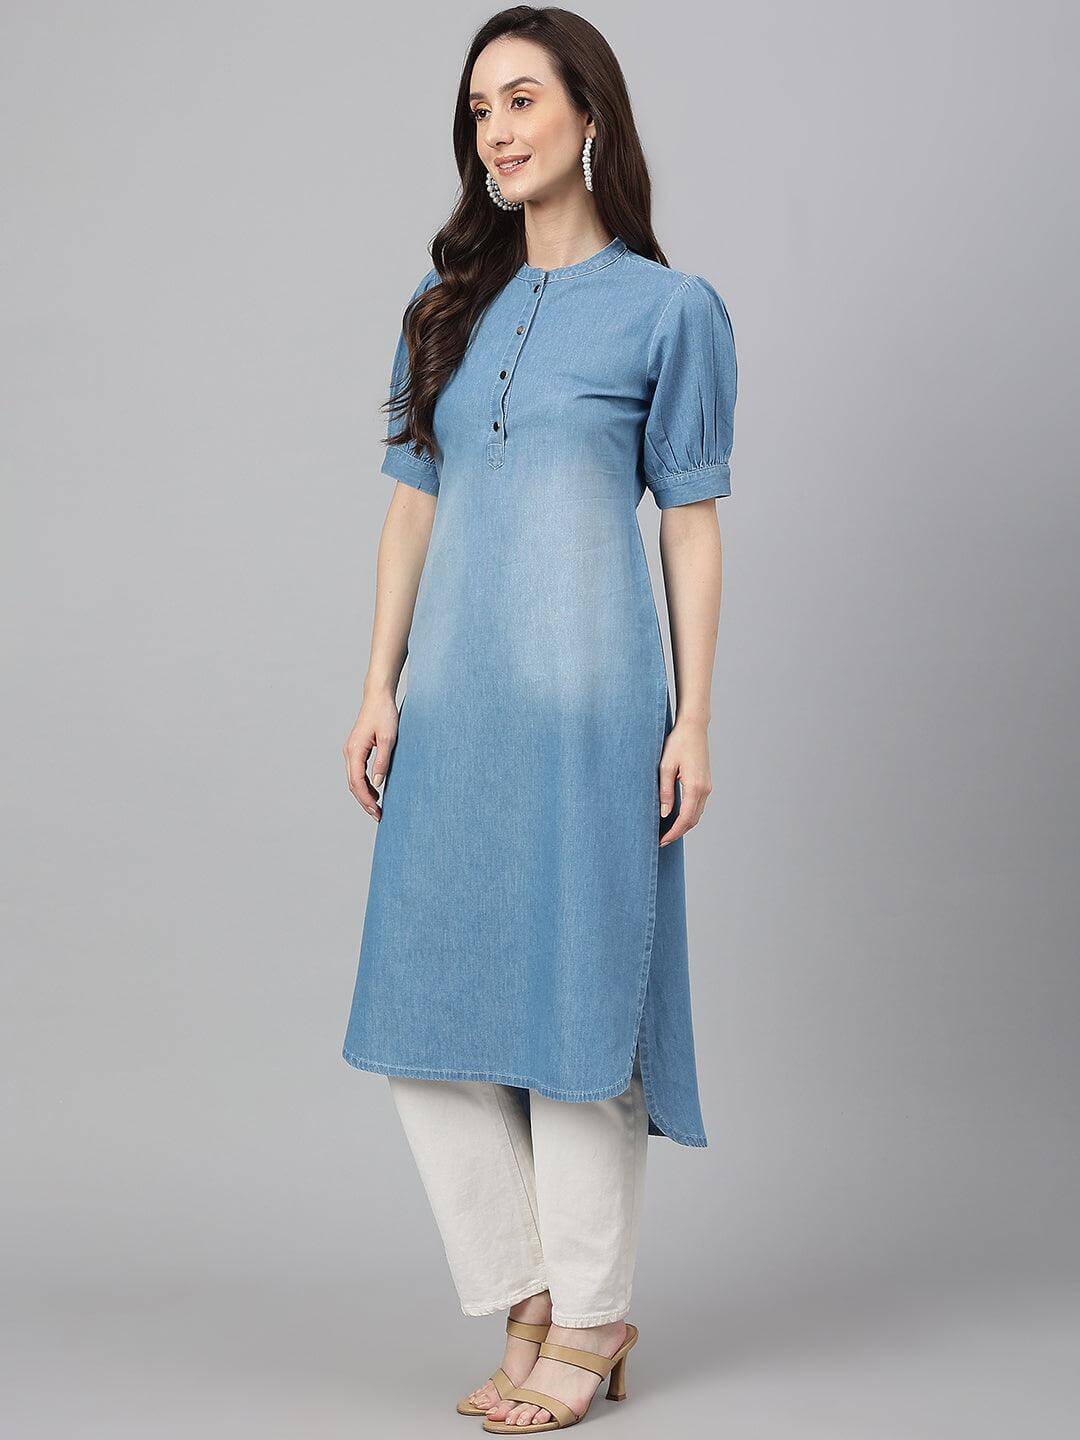 Buy pose india Women Kurti | Denim Kurti | Kurti for Women | 100% Cotton |  Latest Kurti (Large) at Amazon.in